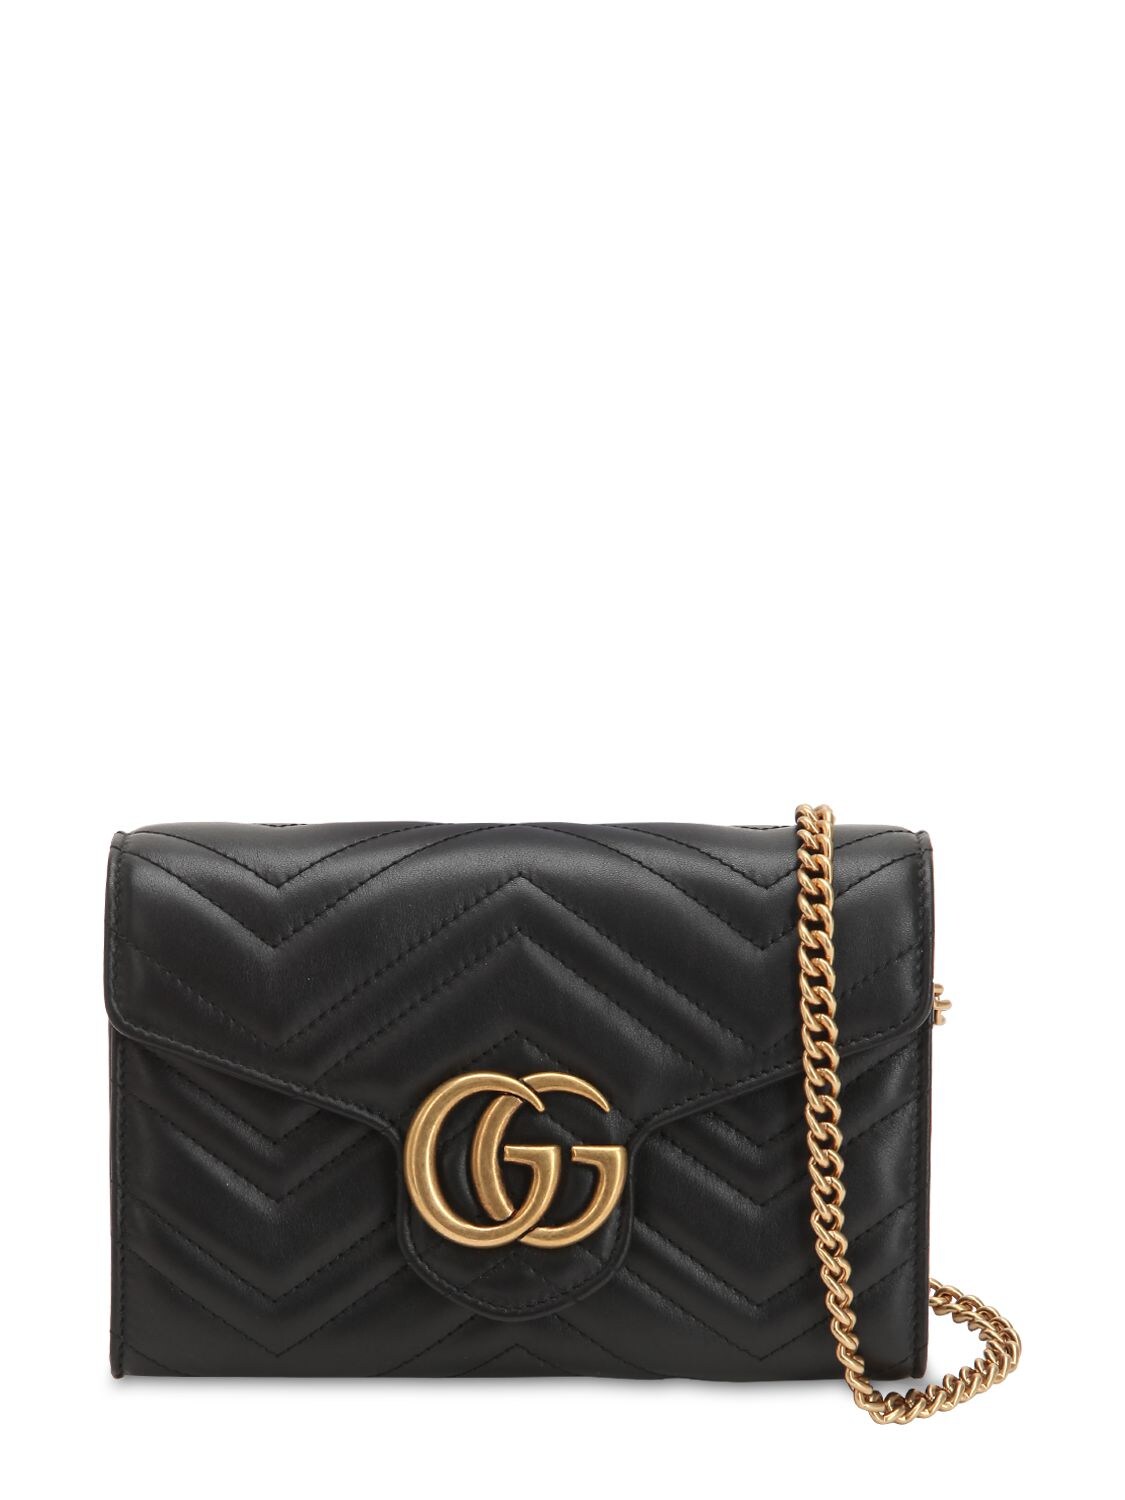 Gucci Gg Marmont Leather Shoulder Bag In Black